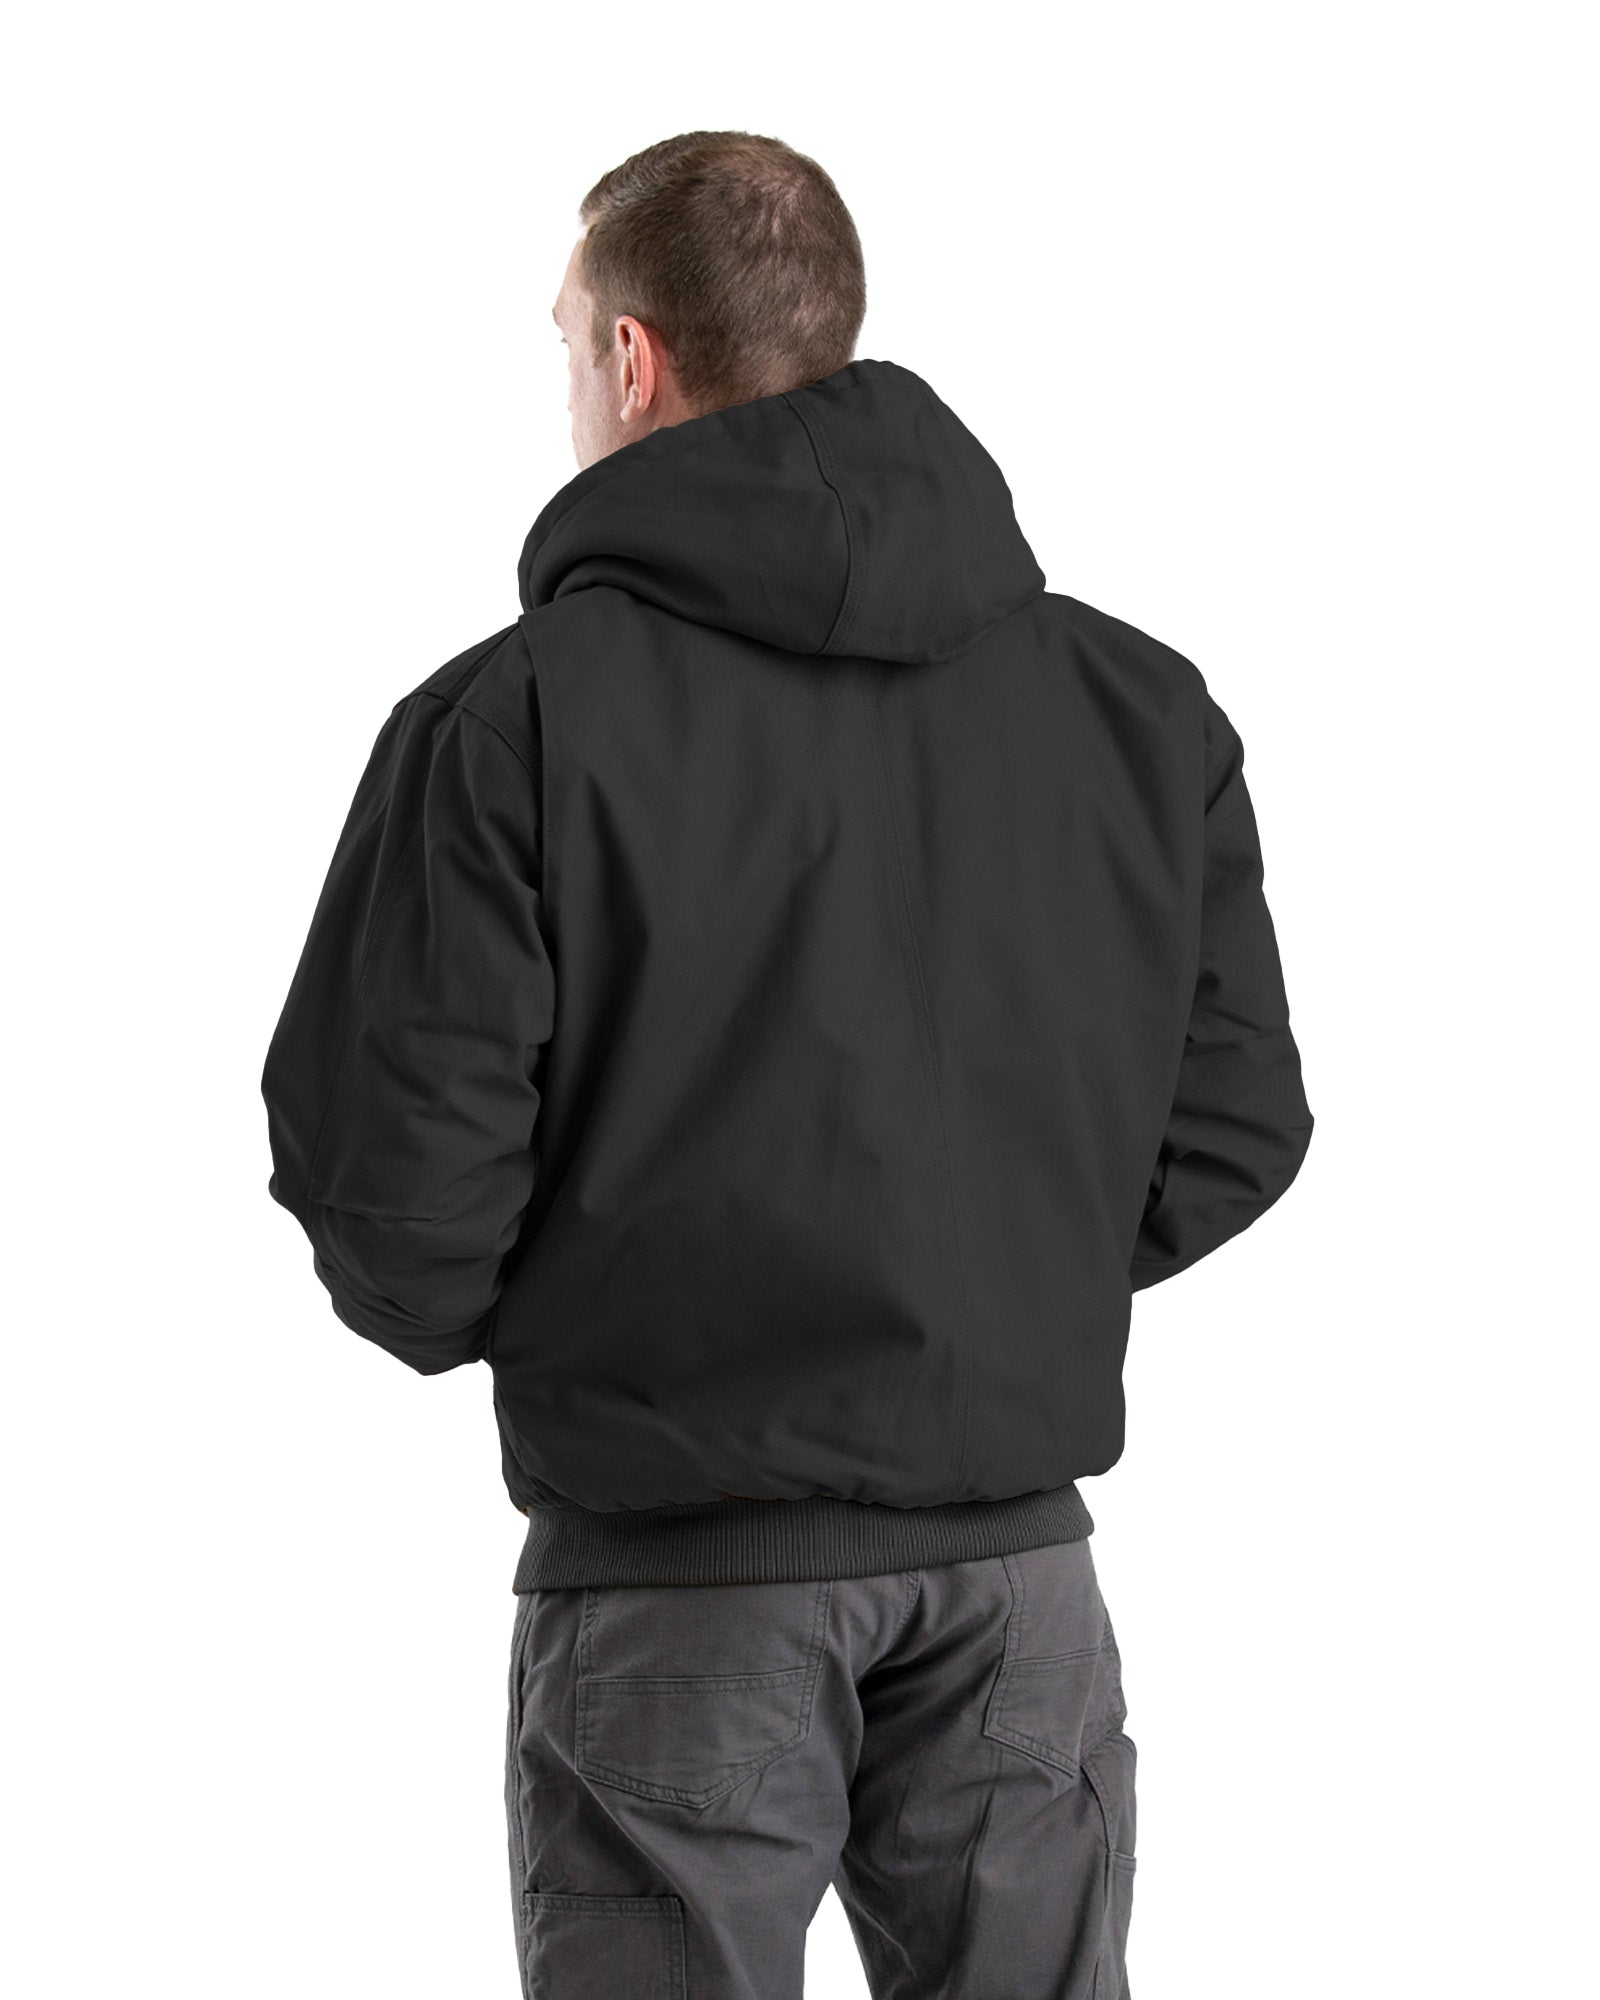 Buy Black Powder Lite Hooded Jacket for Men Online at Columbia Sportswear |  518091